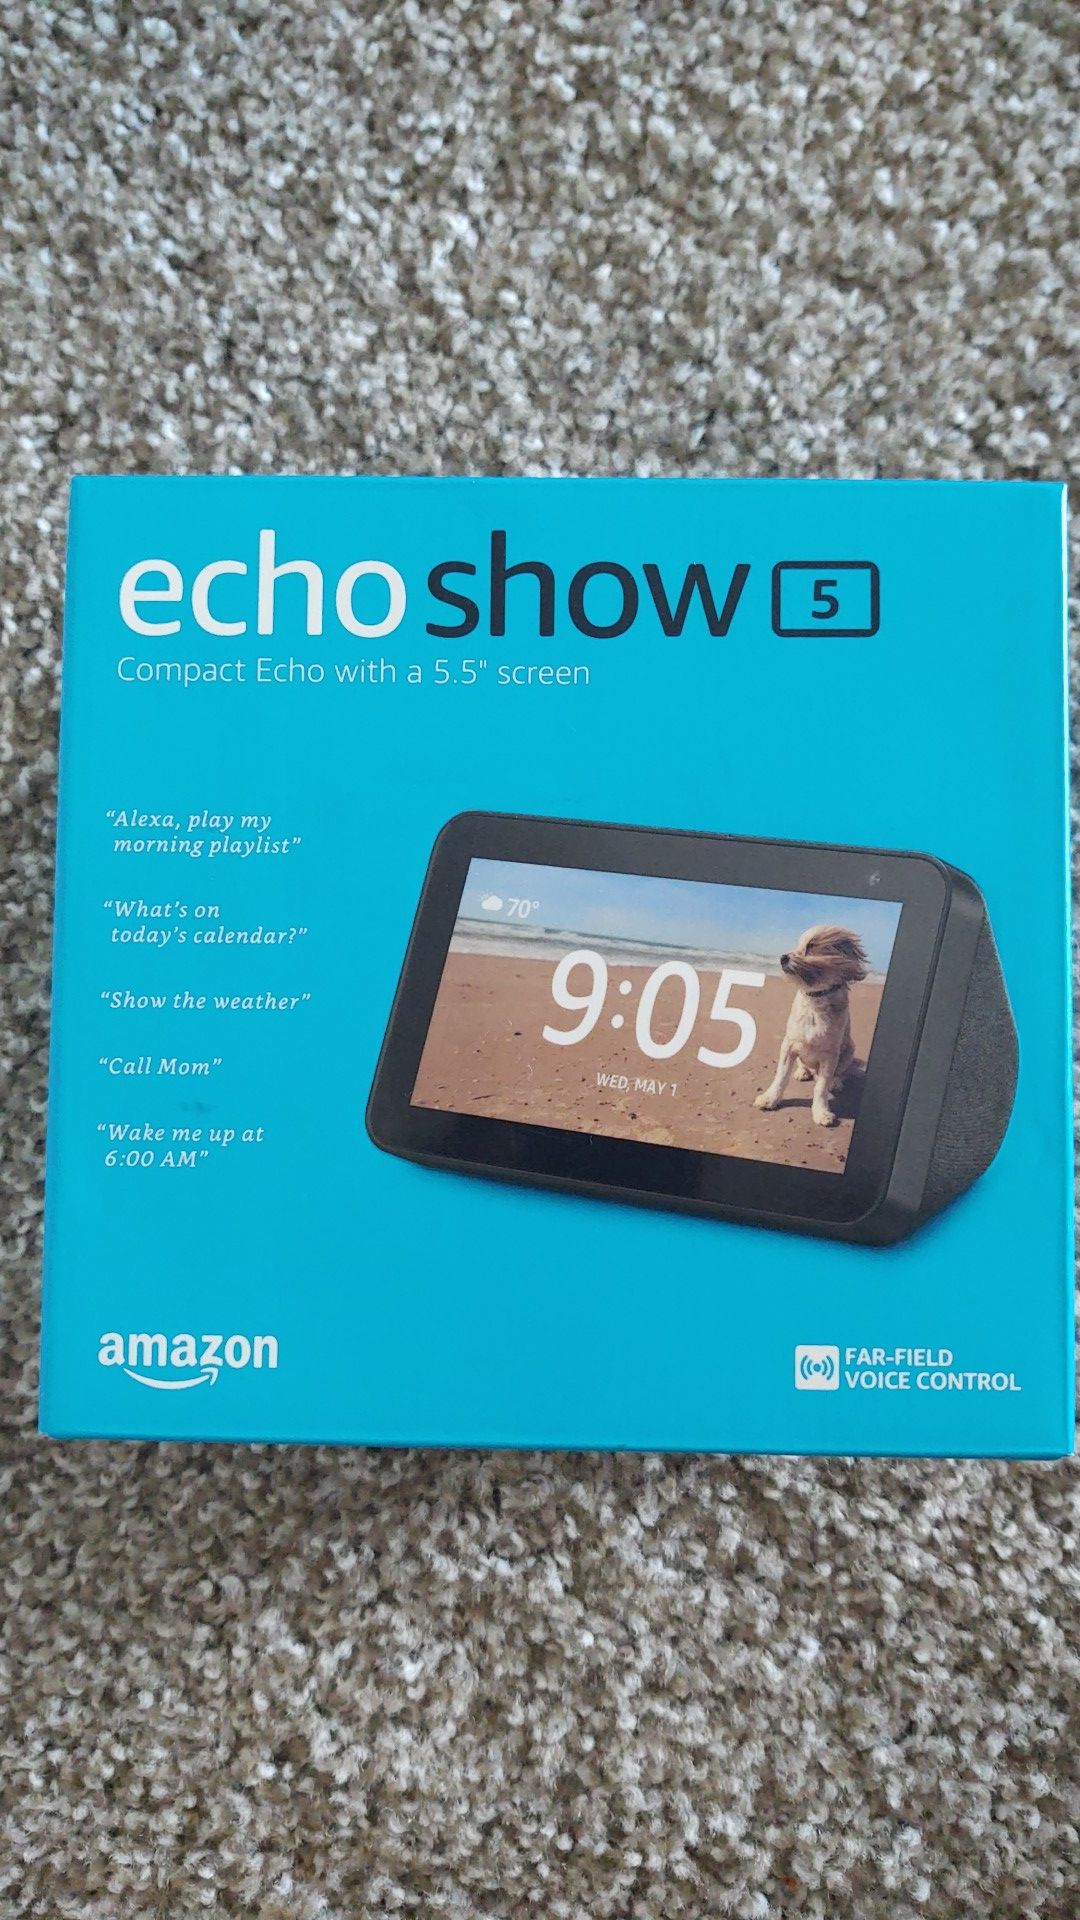 Amazon echo show 5 MRP $89.99